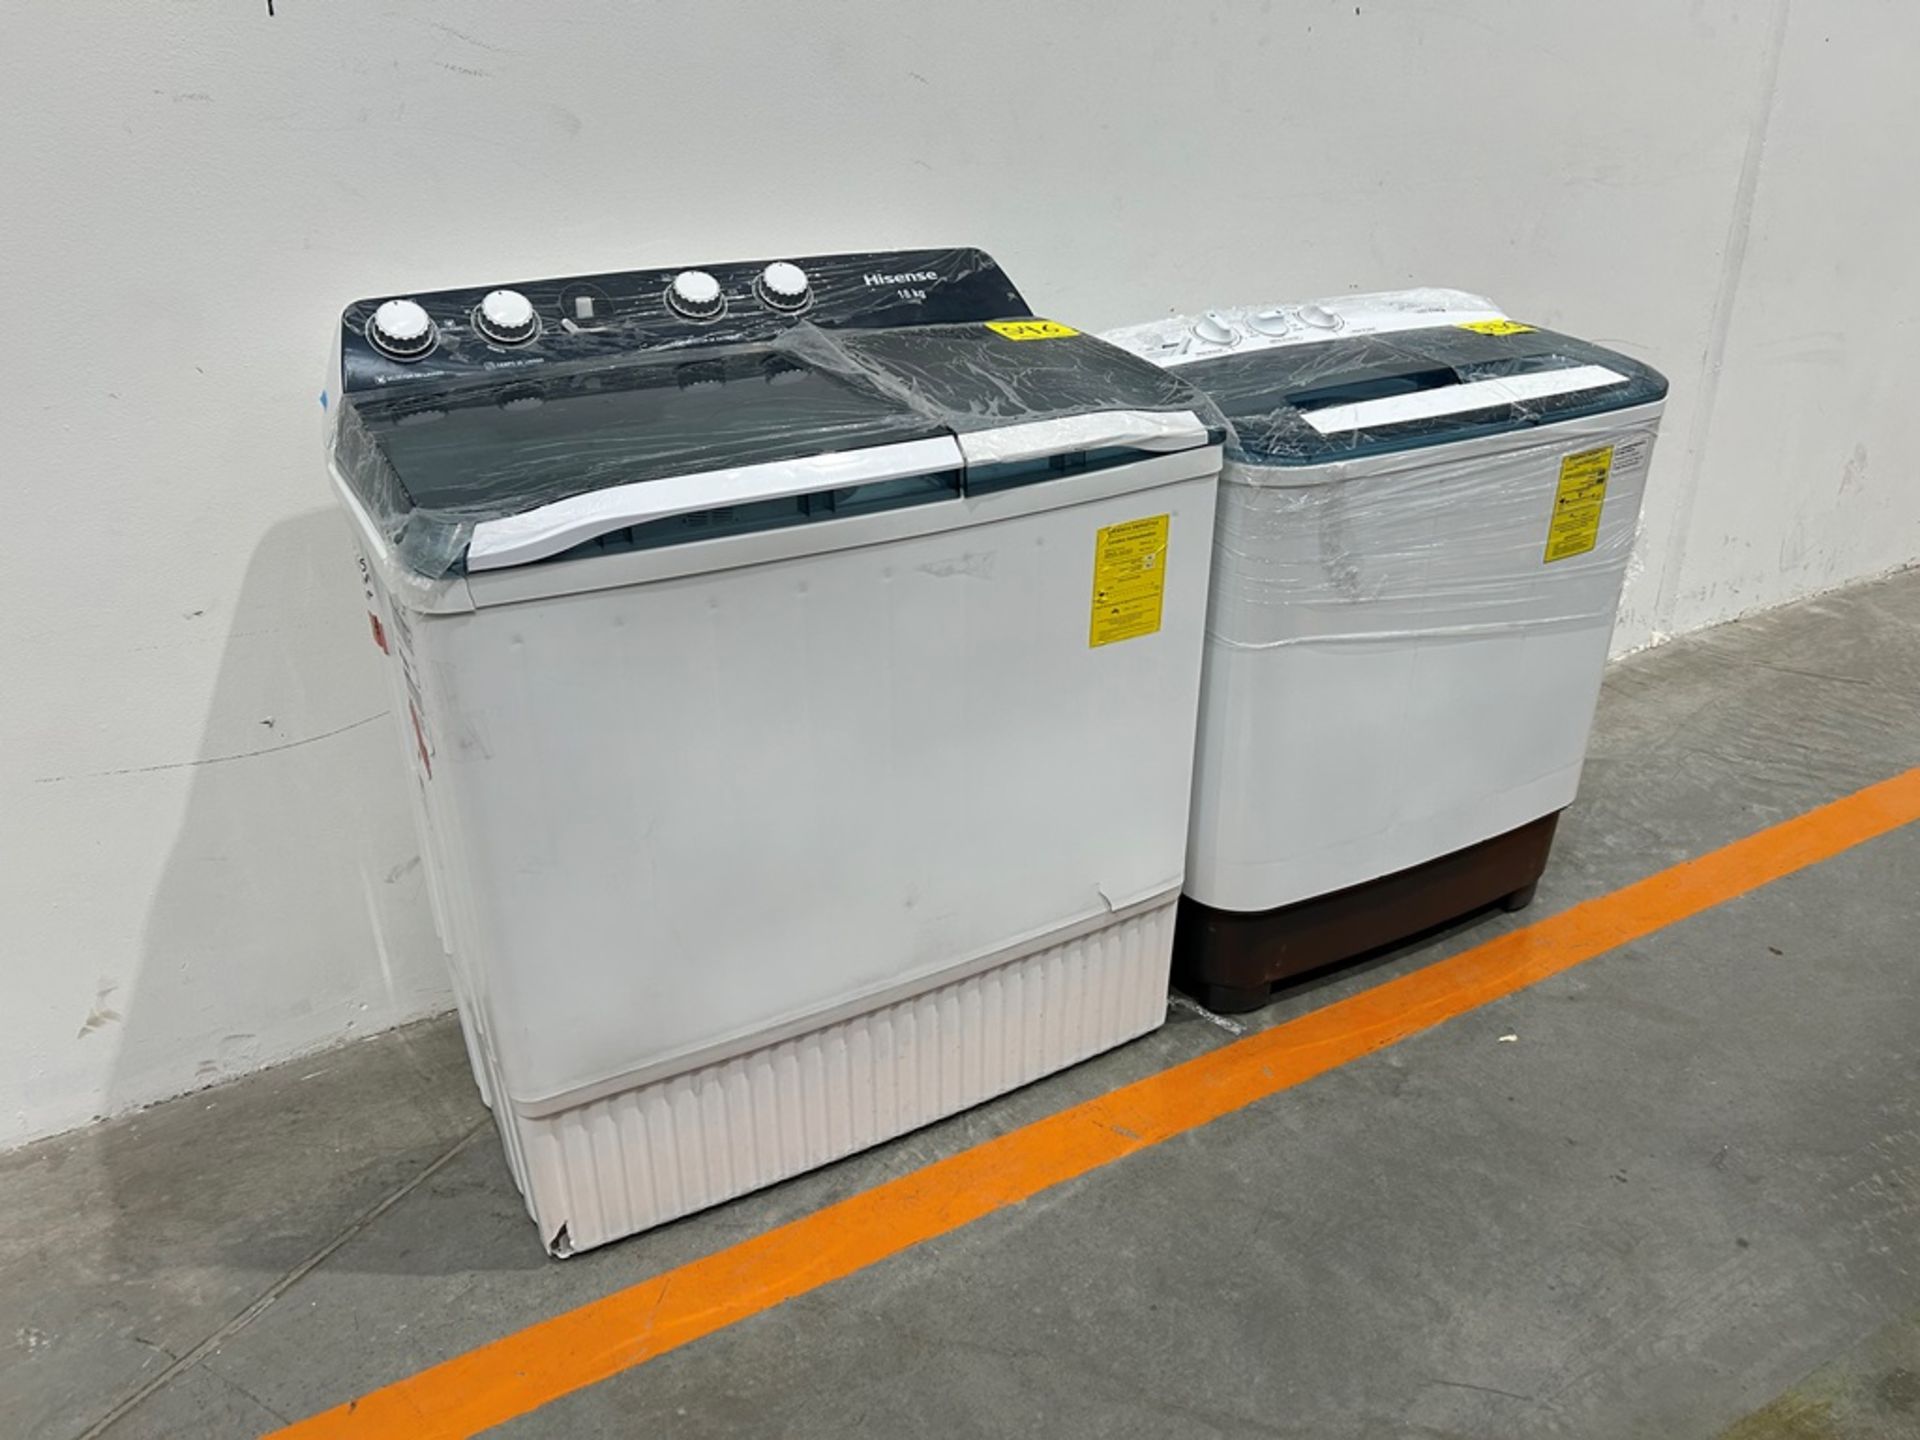 Lote de 2 lavadoras contiene: 1 Lavadora de 18KG Marca HISENSE, Modelo WSA1801P, Serie 220073, Colo - Image 2 of 12